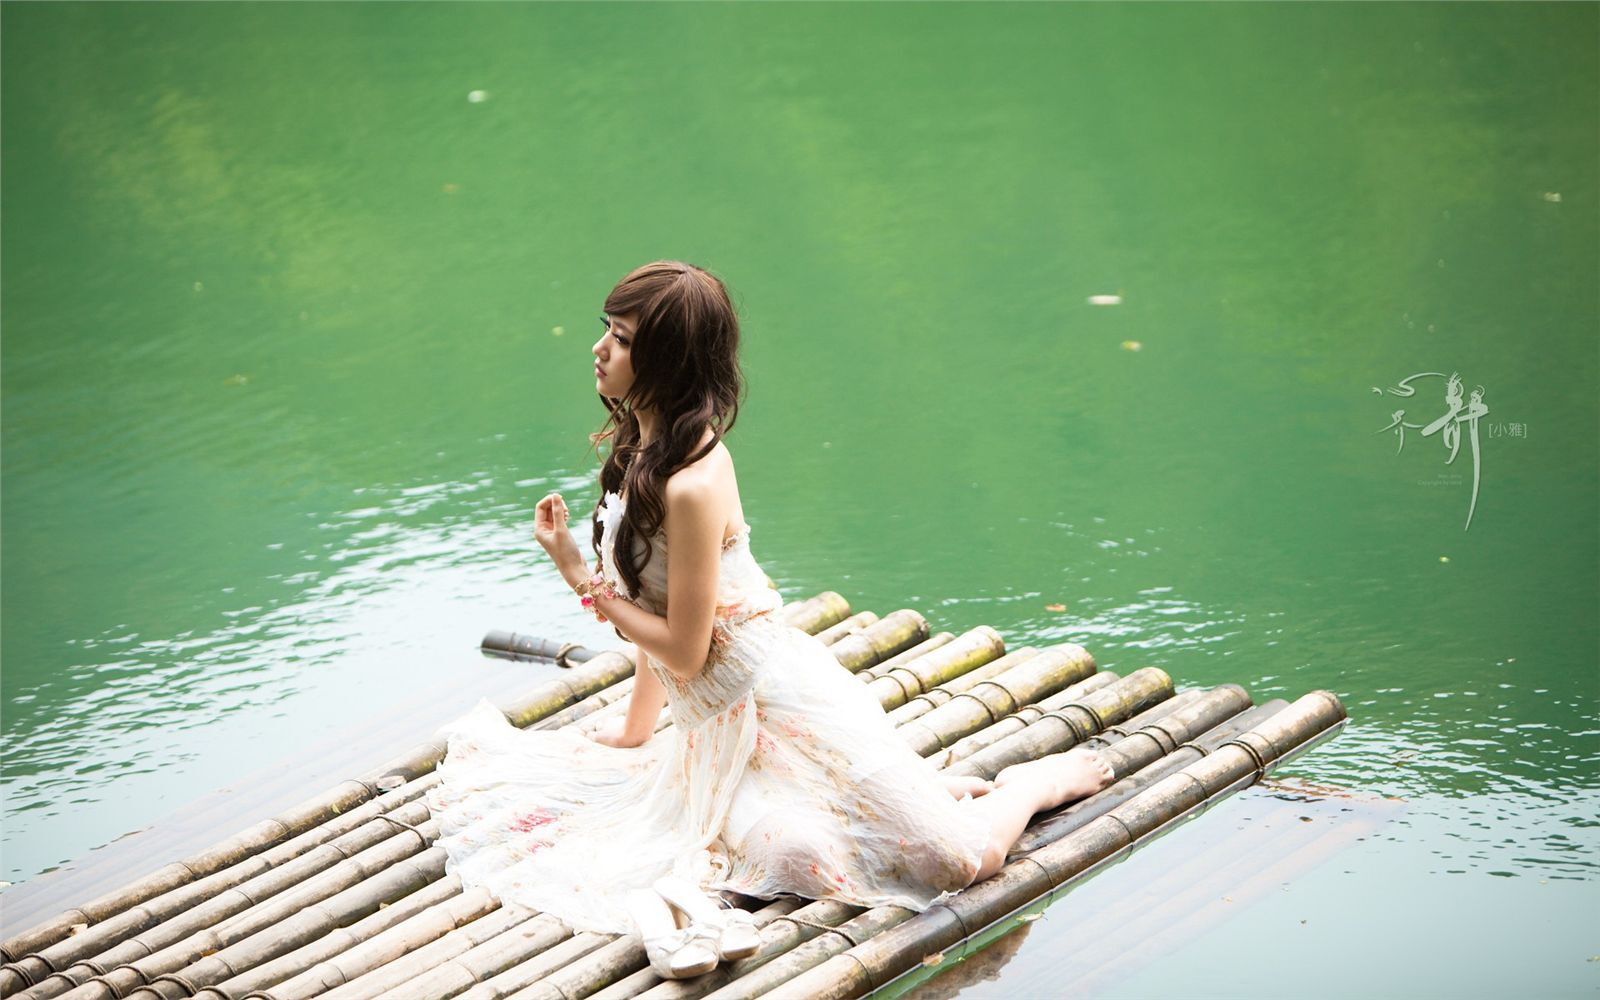 Taiwan Beauty Model Xiaoya takes photos of online beauty models